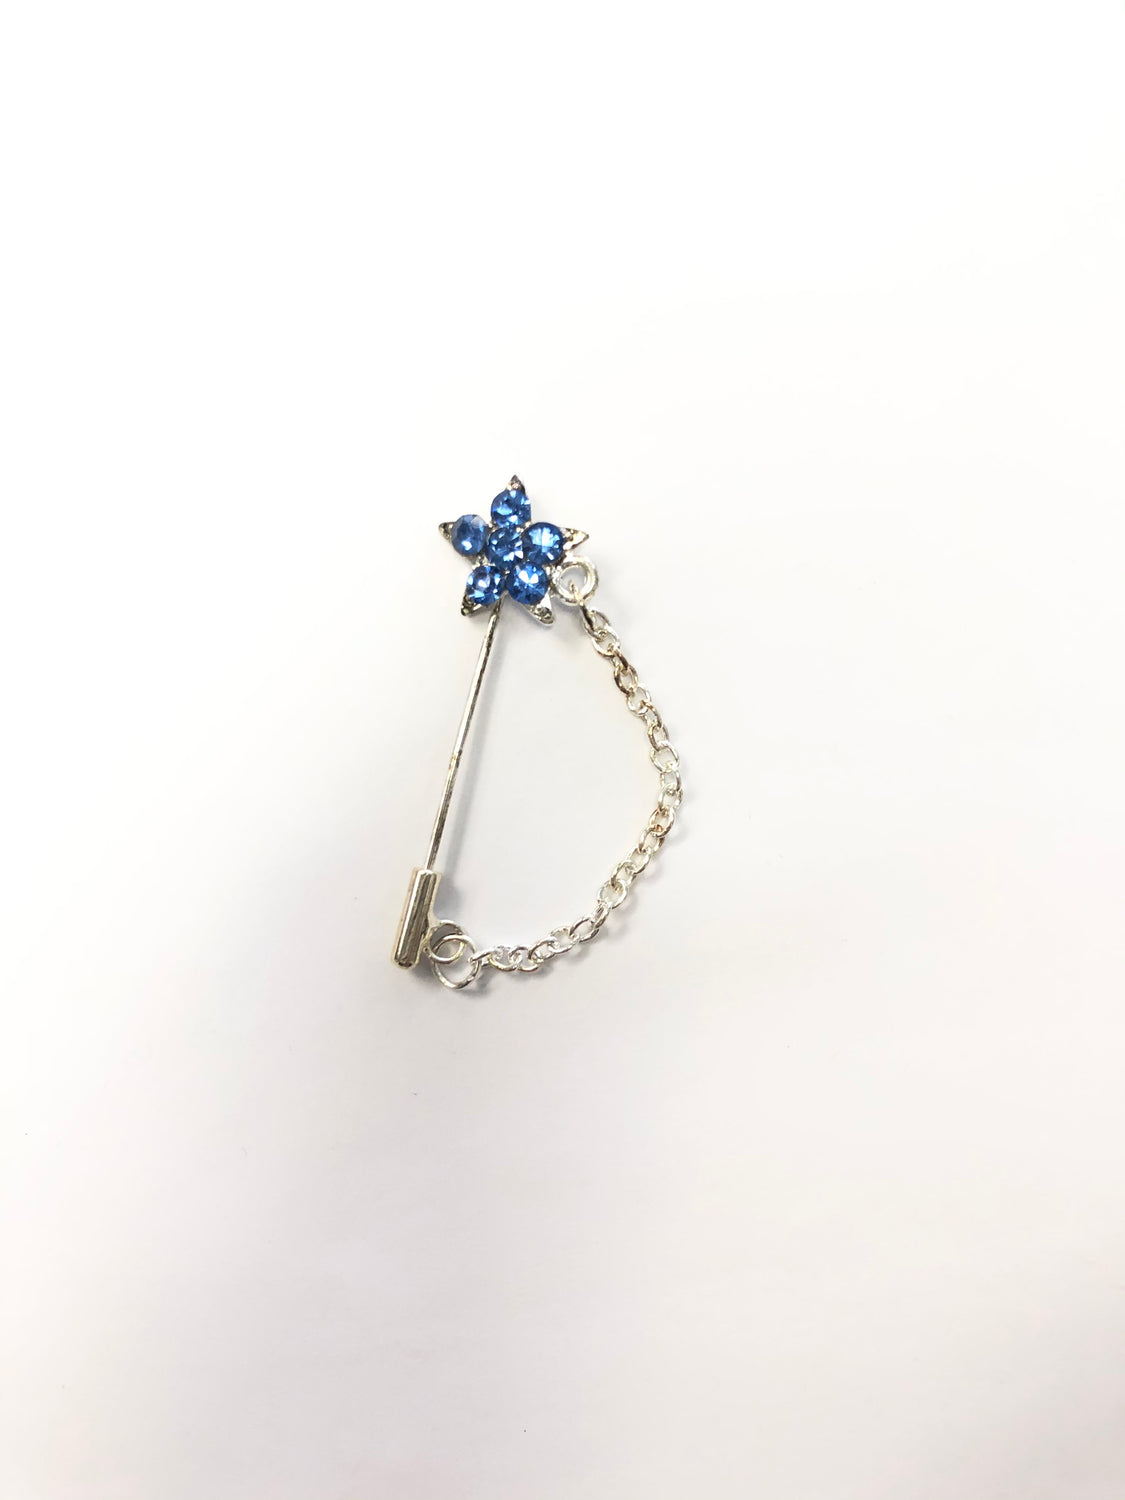 silver star clasp hijab pin with blue jewels